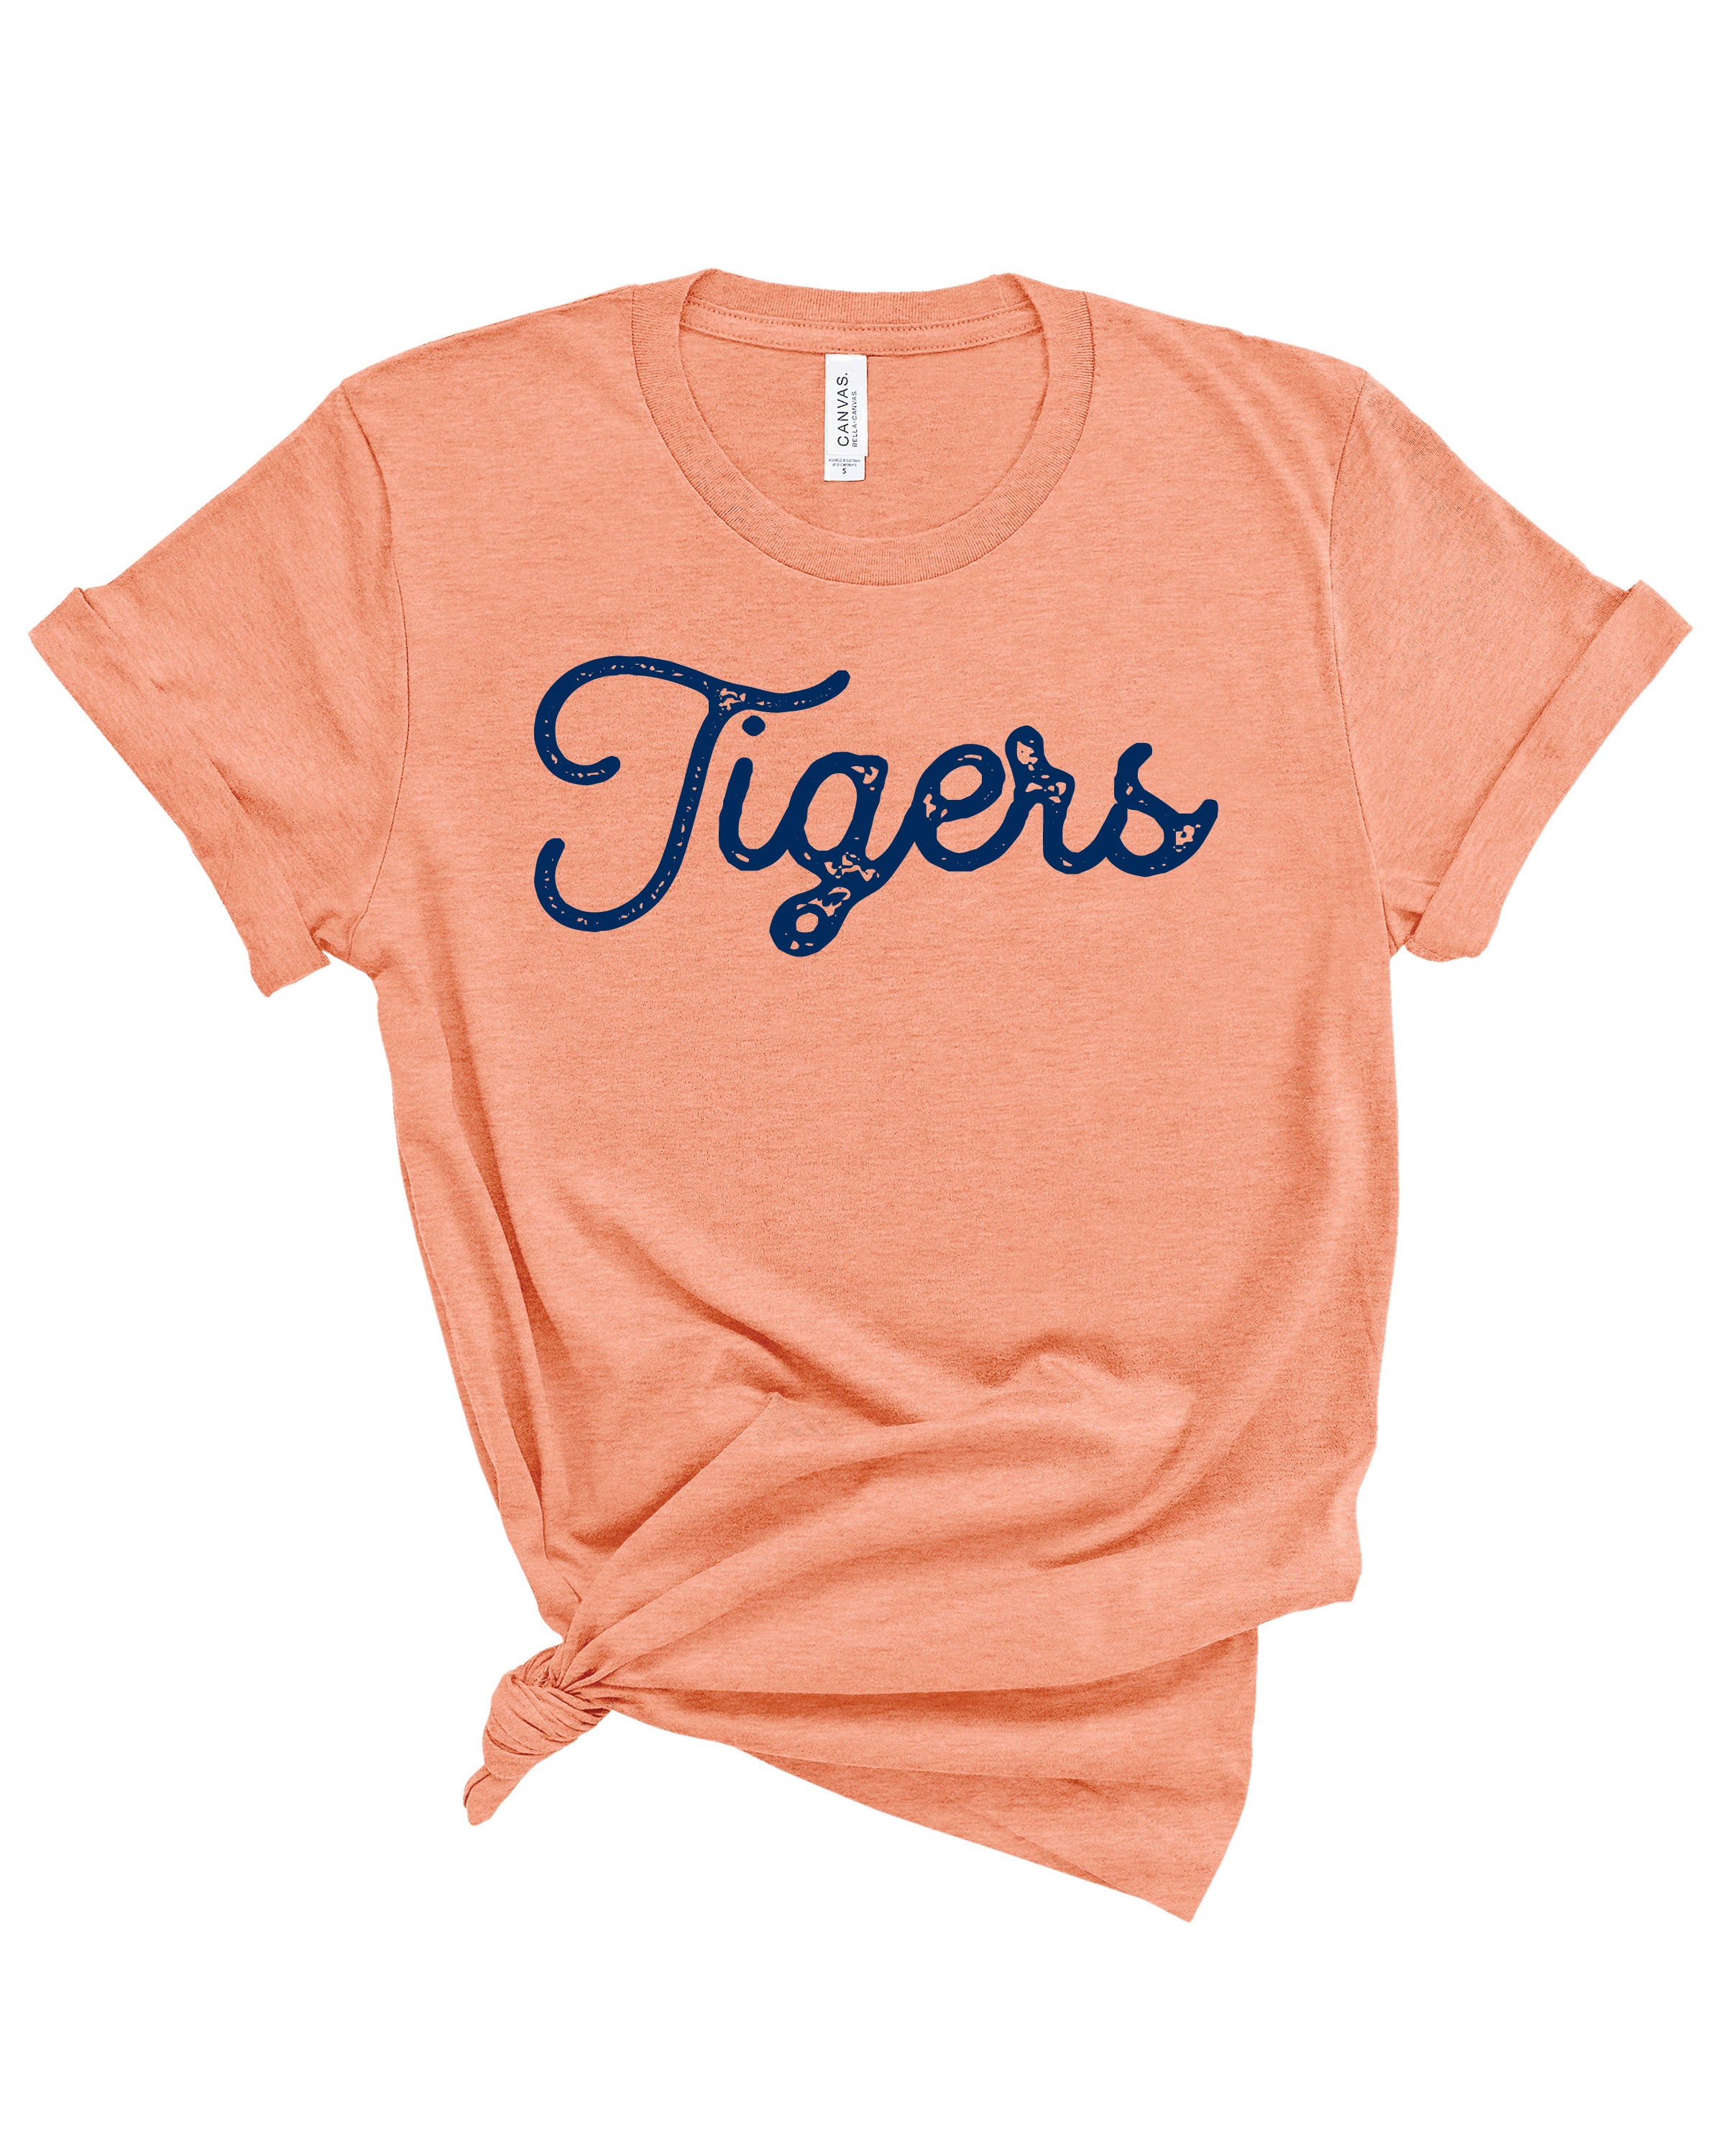  Colorful Tiger Tee shirts, Tigers Fashion Graphic